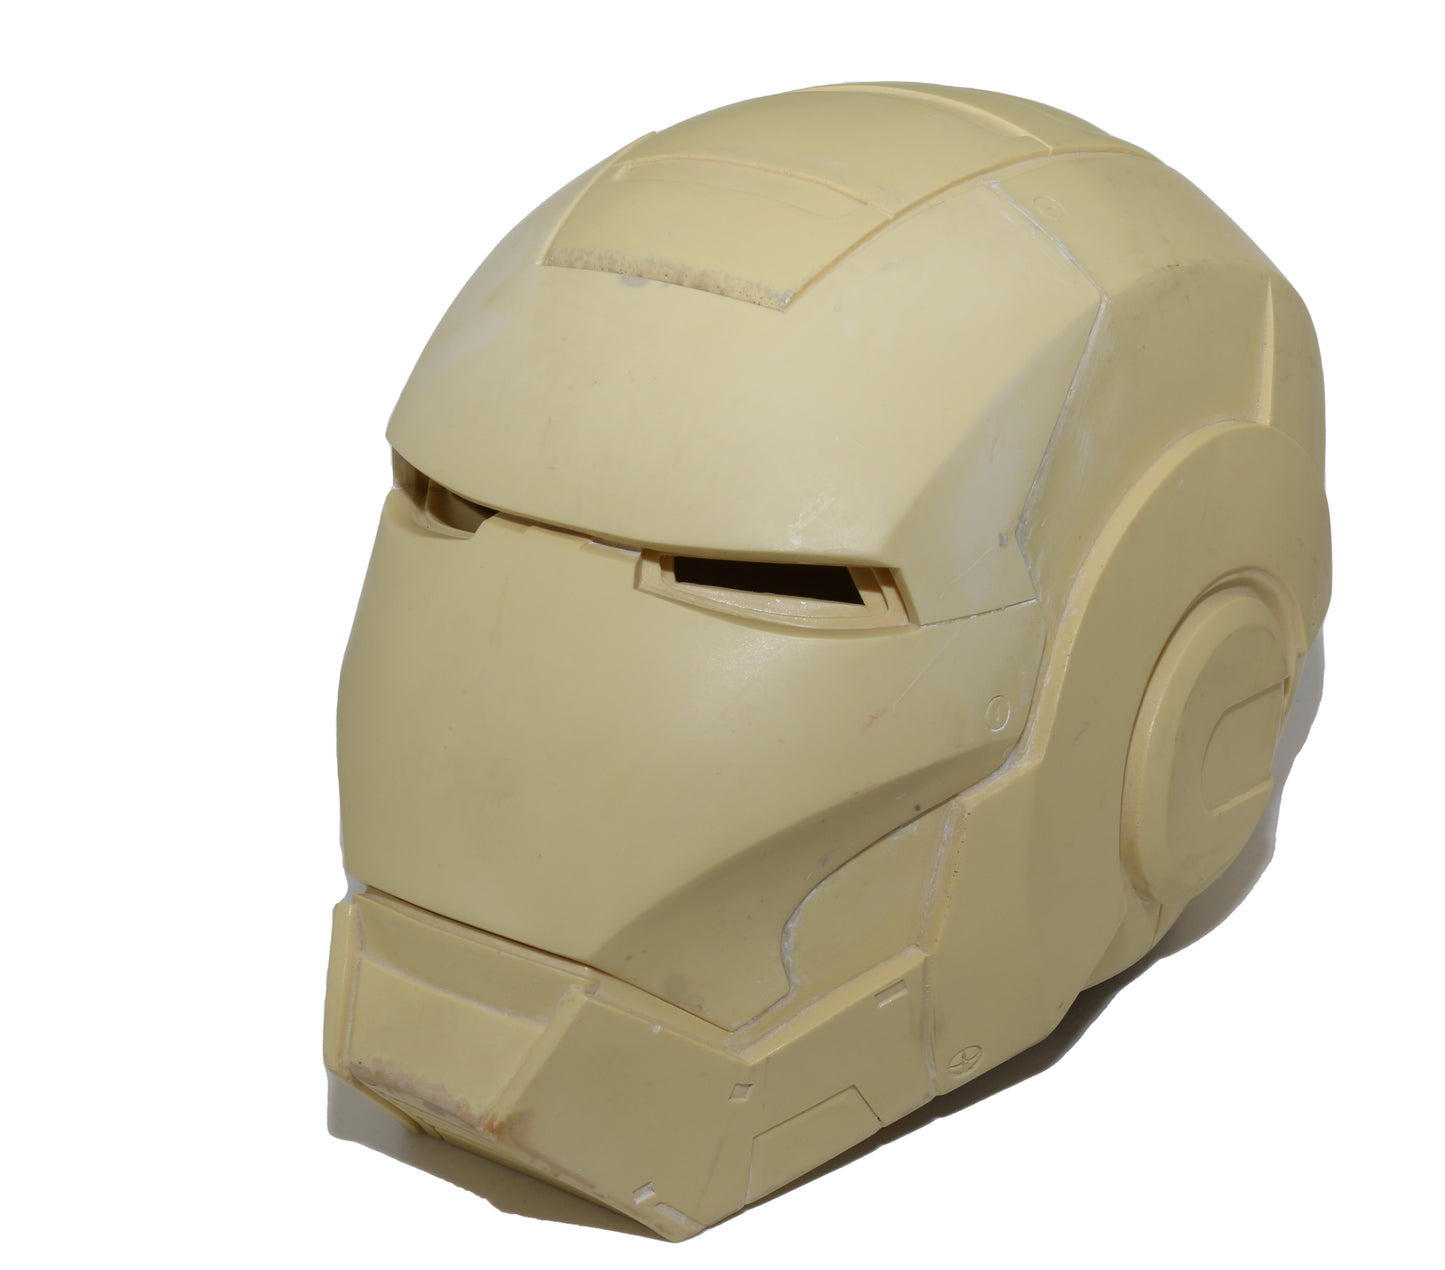 
                  
                    Iron Man 2 Production Made War Machine Prototype Helmet Design from SFX Artist - 2010
                  
                